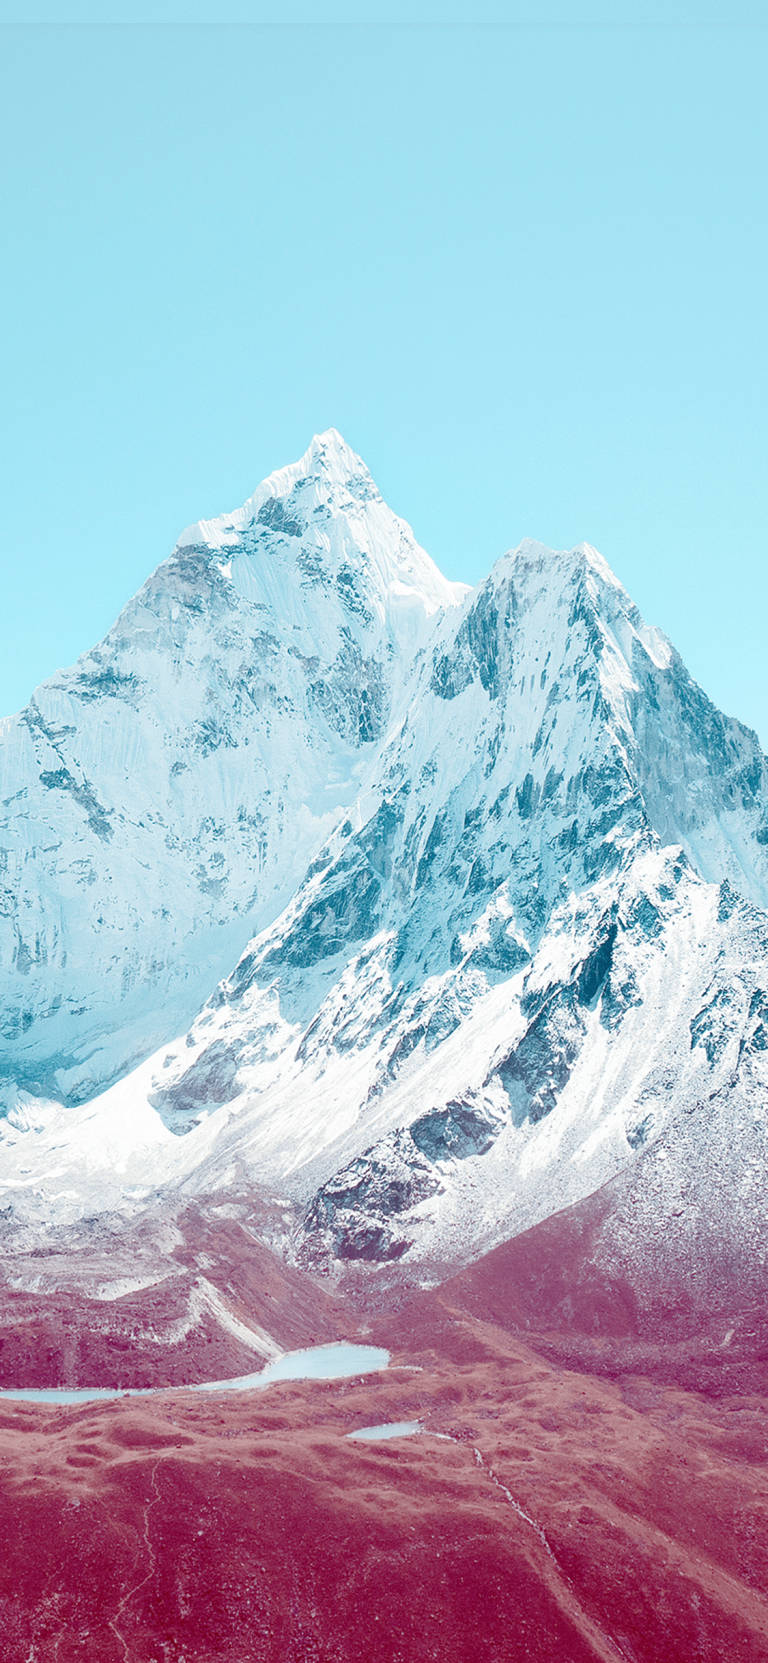 Snowy Mountains Original iPhone 4 Wallpaper